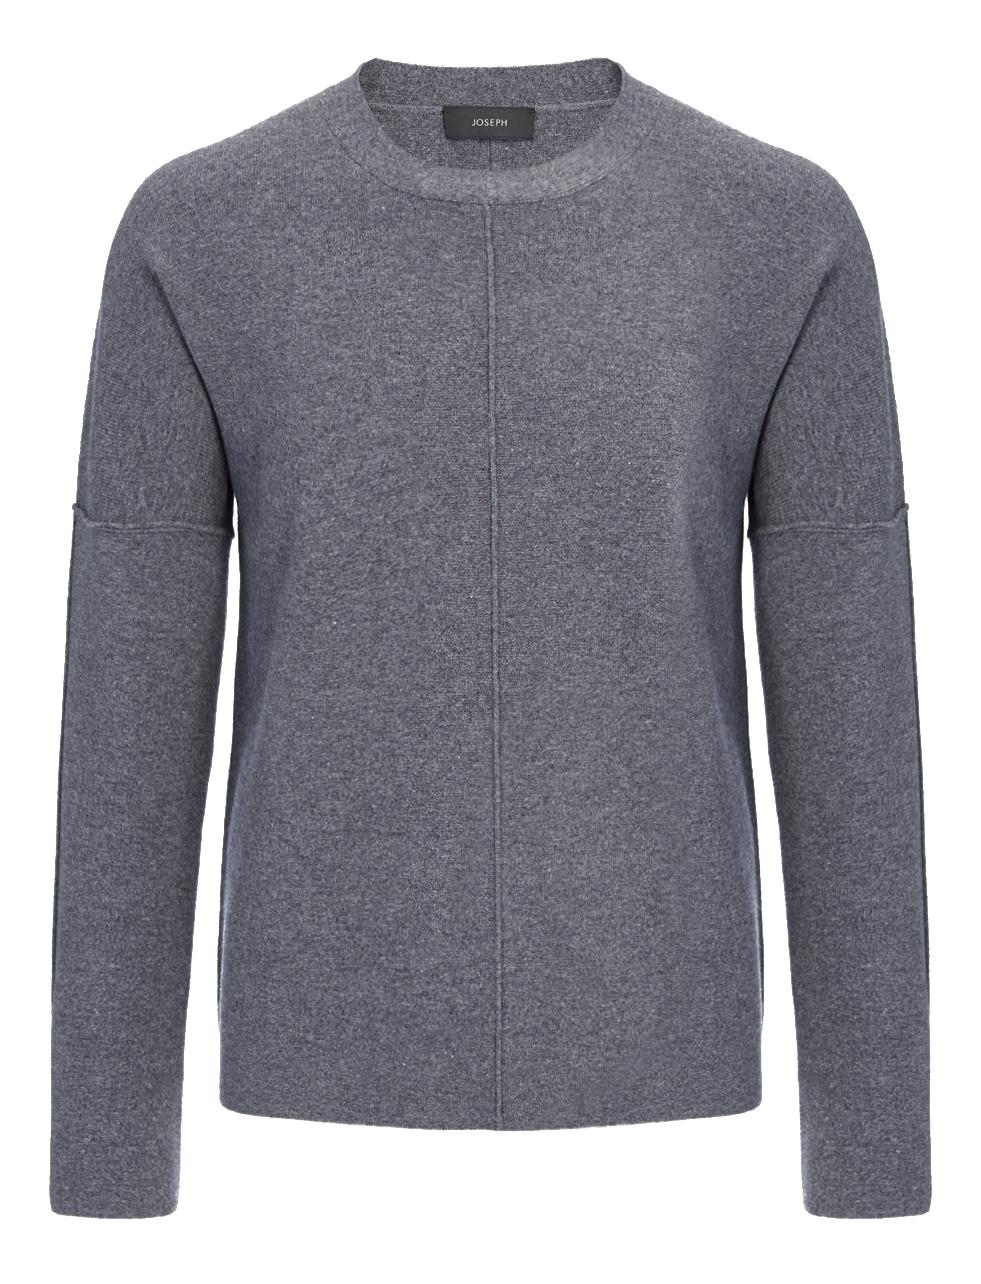 Lyst - Joseph Milano Sweater in Gray for Men